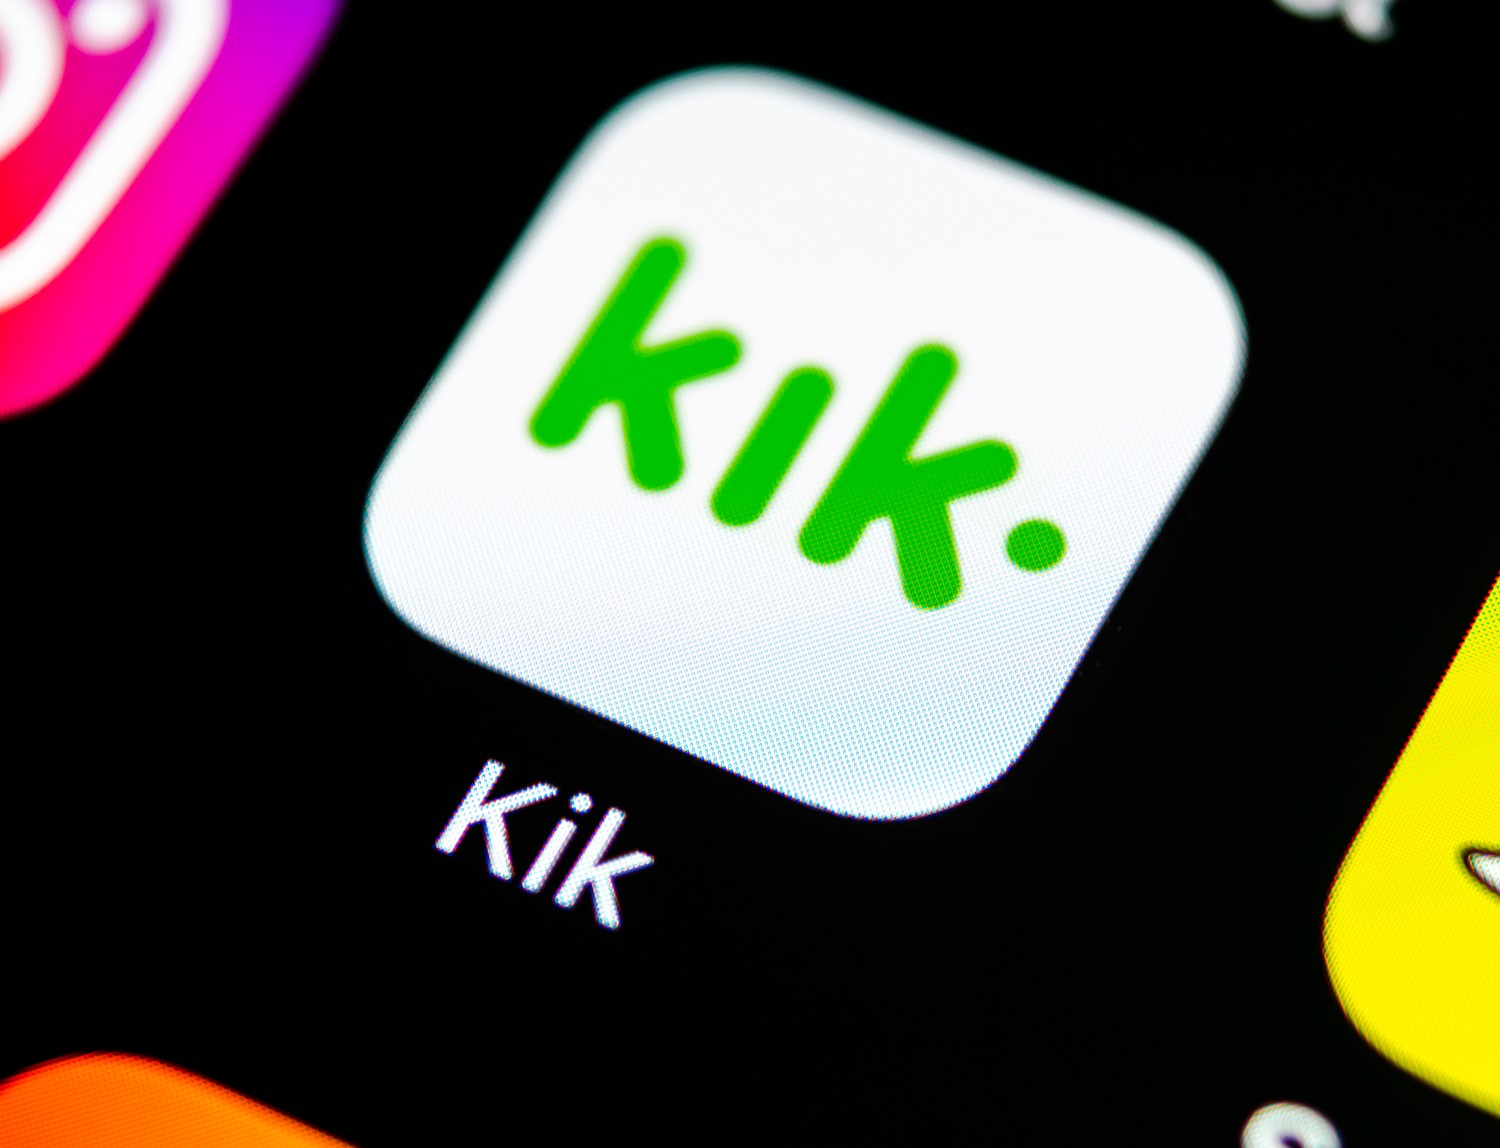 Kik Messaging App To Shut Down Following SEC Lawsuit Against ICO